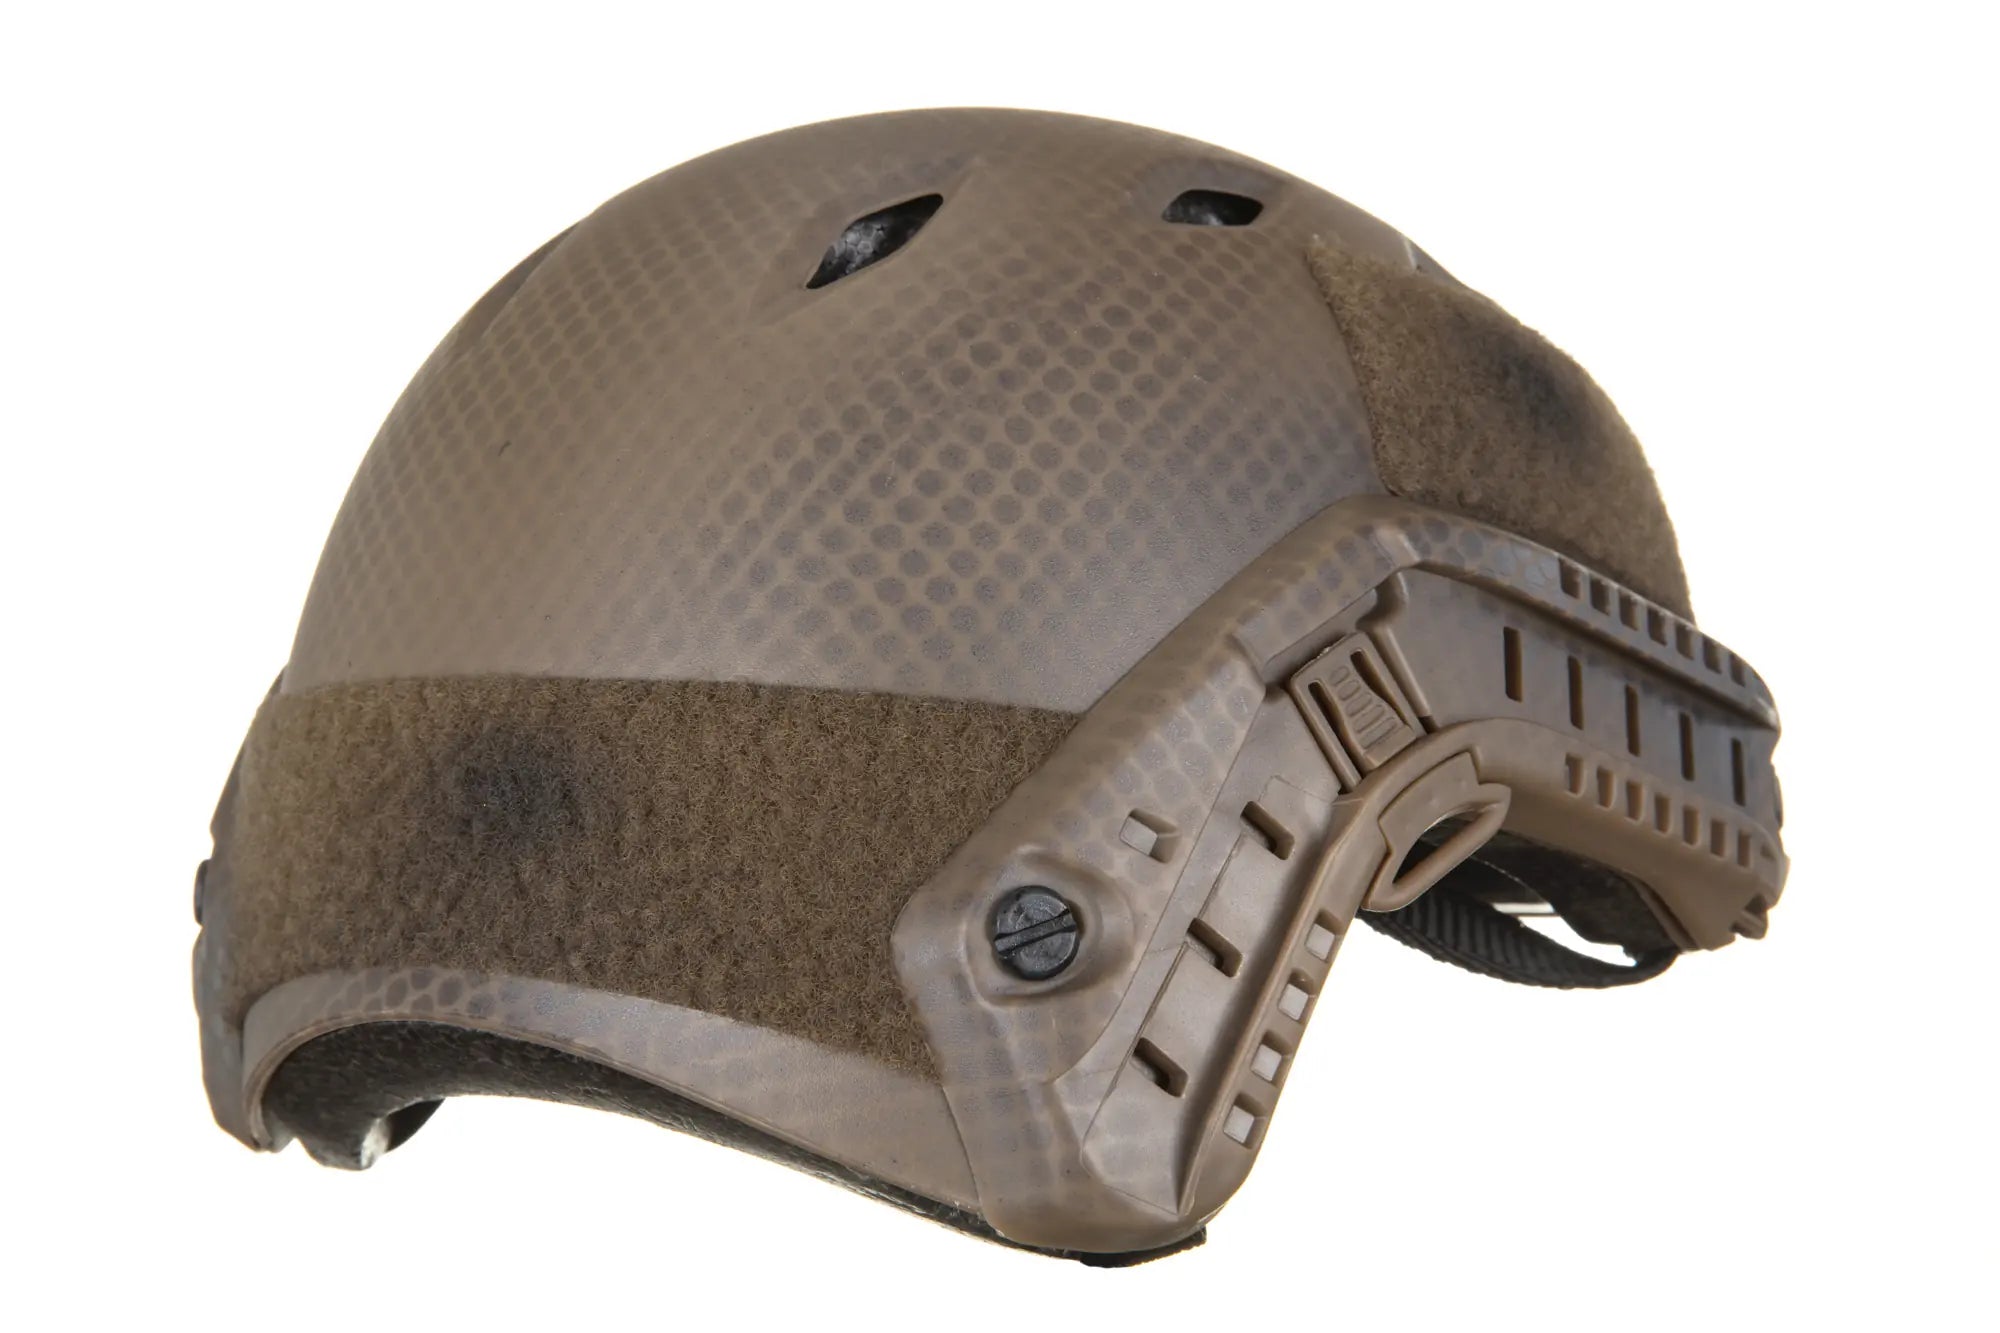 Replica of Emerson Gear FAST type BJ Eco Coyote Brown helmet-1